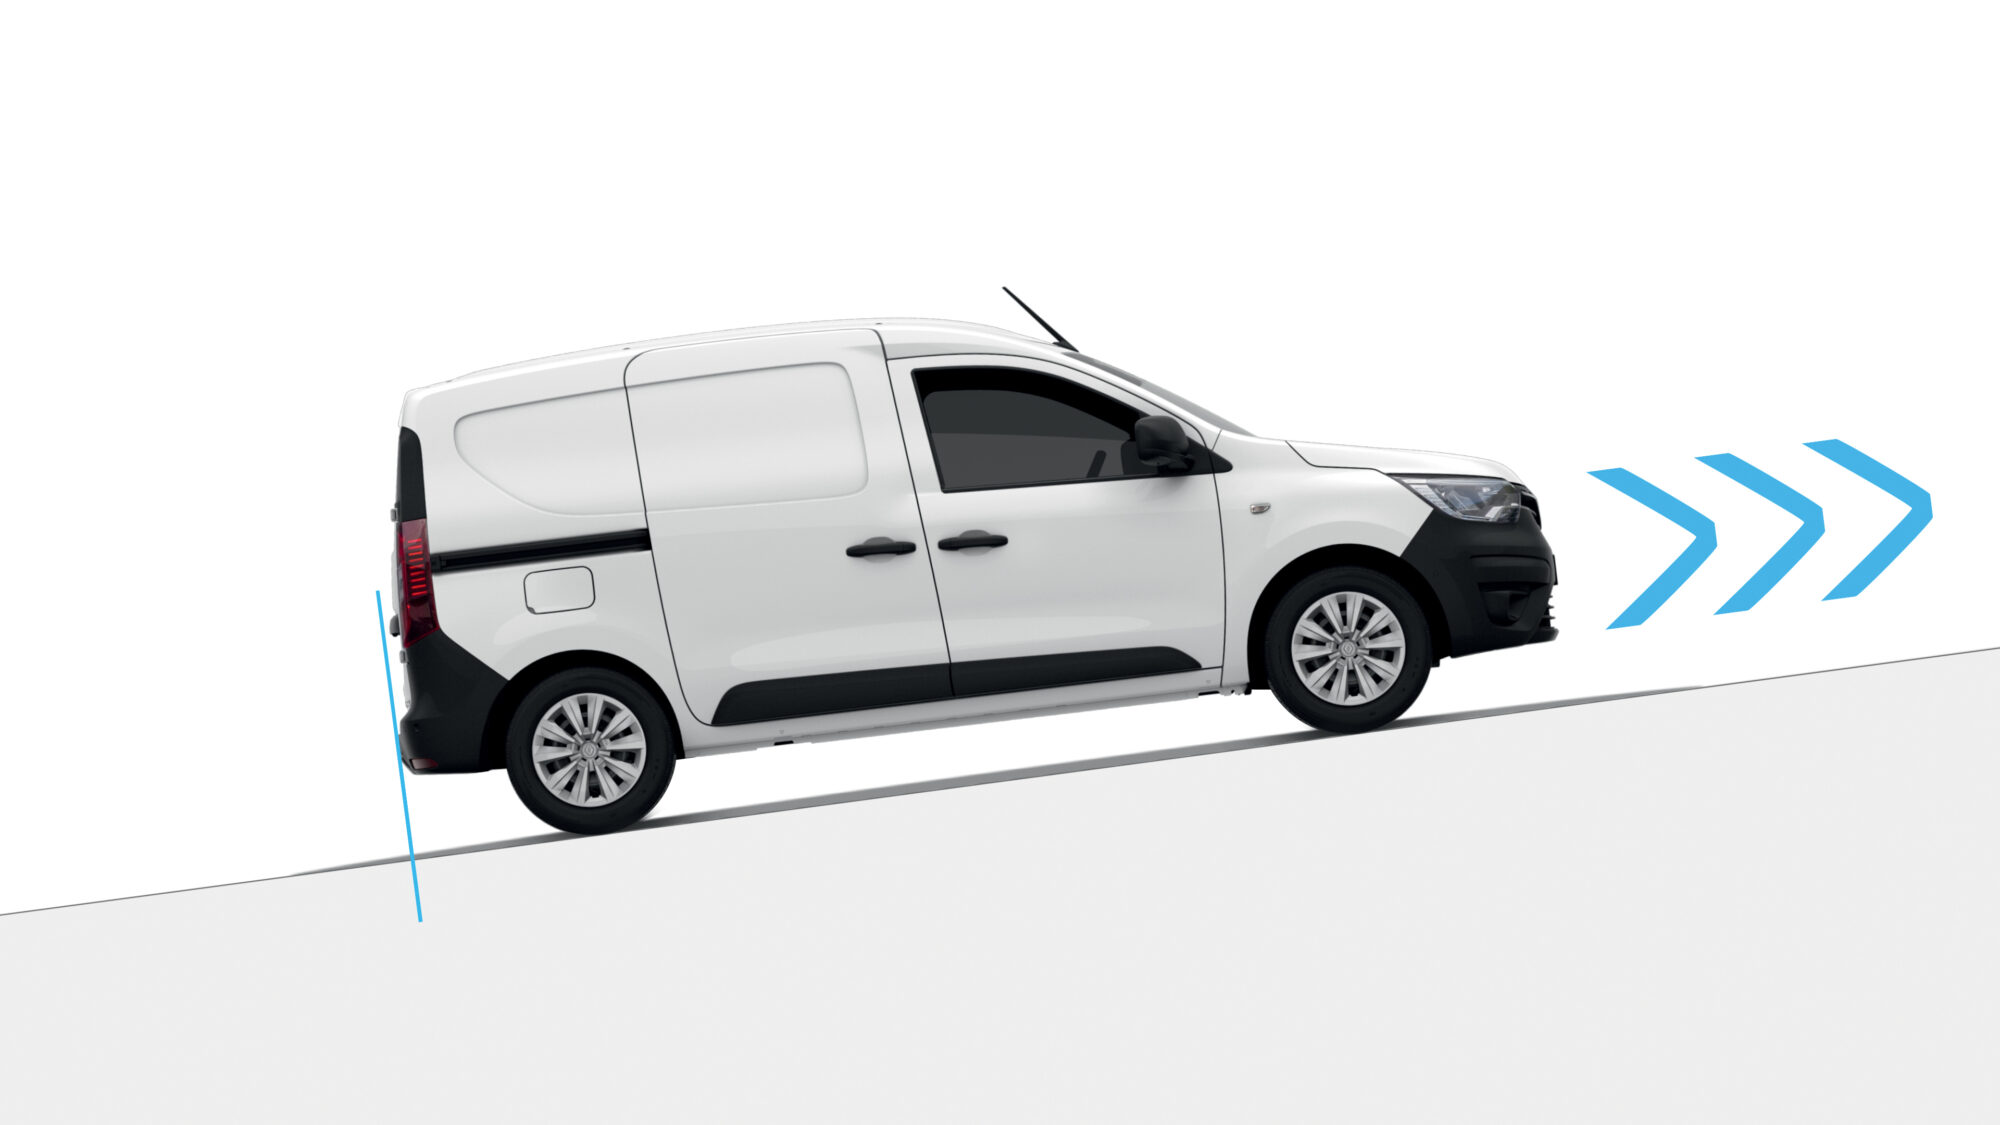 2021 - New Renault Express Van - Technical drawings